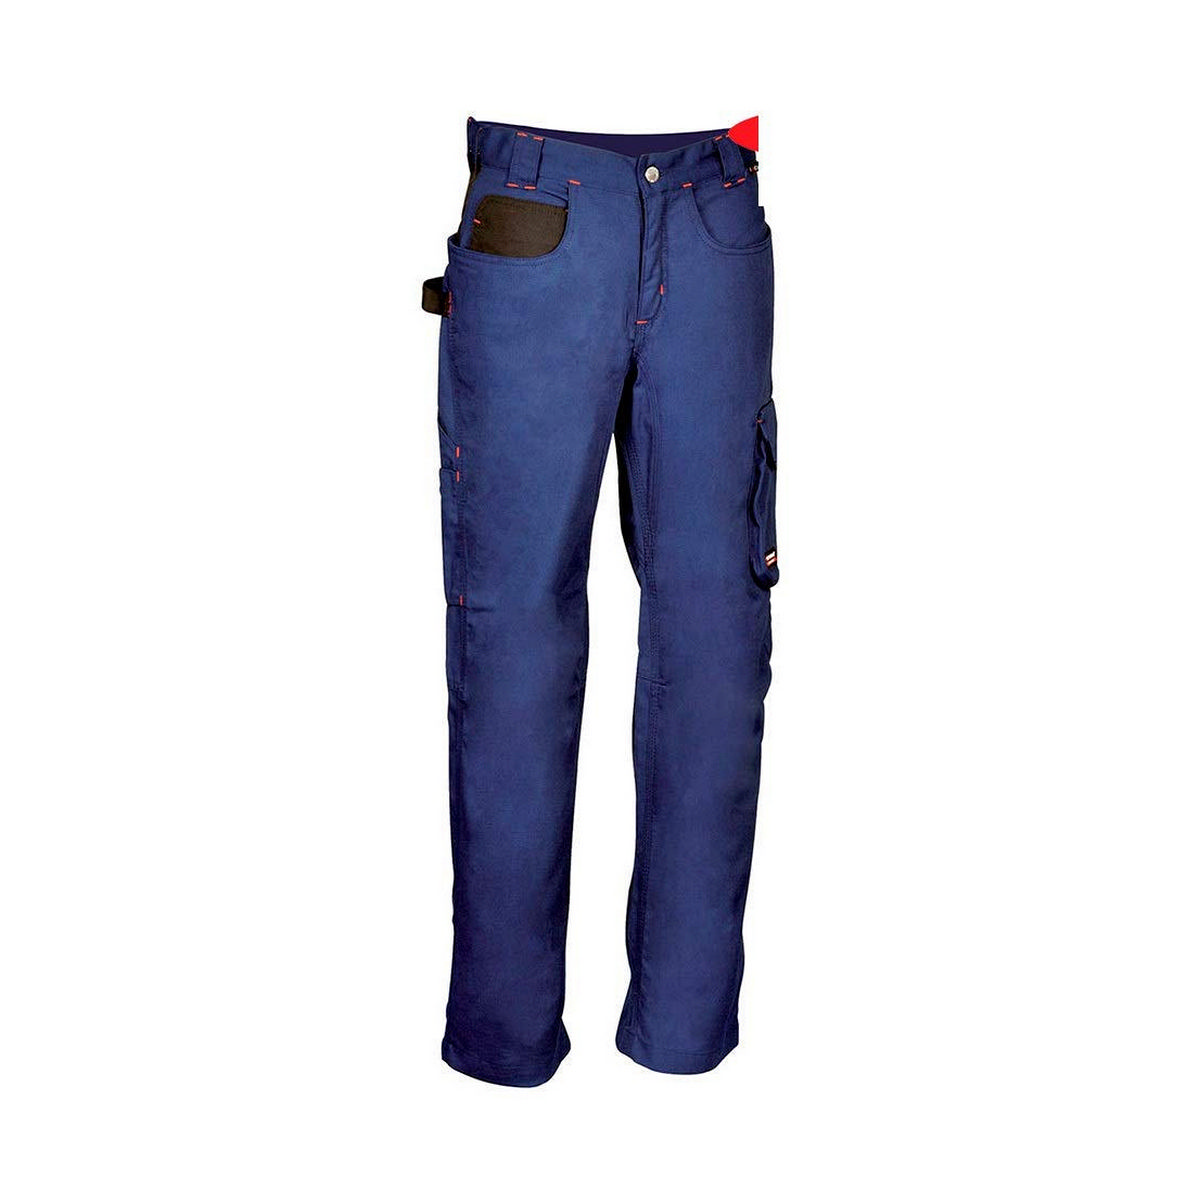 Pantaloni de siguranță Cofra Walklander Femeie Negru Bleumarin - Mărime 38